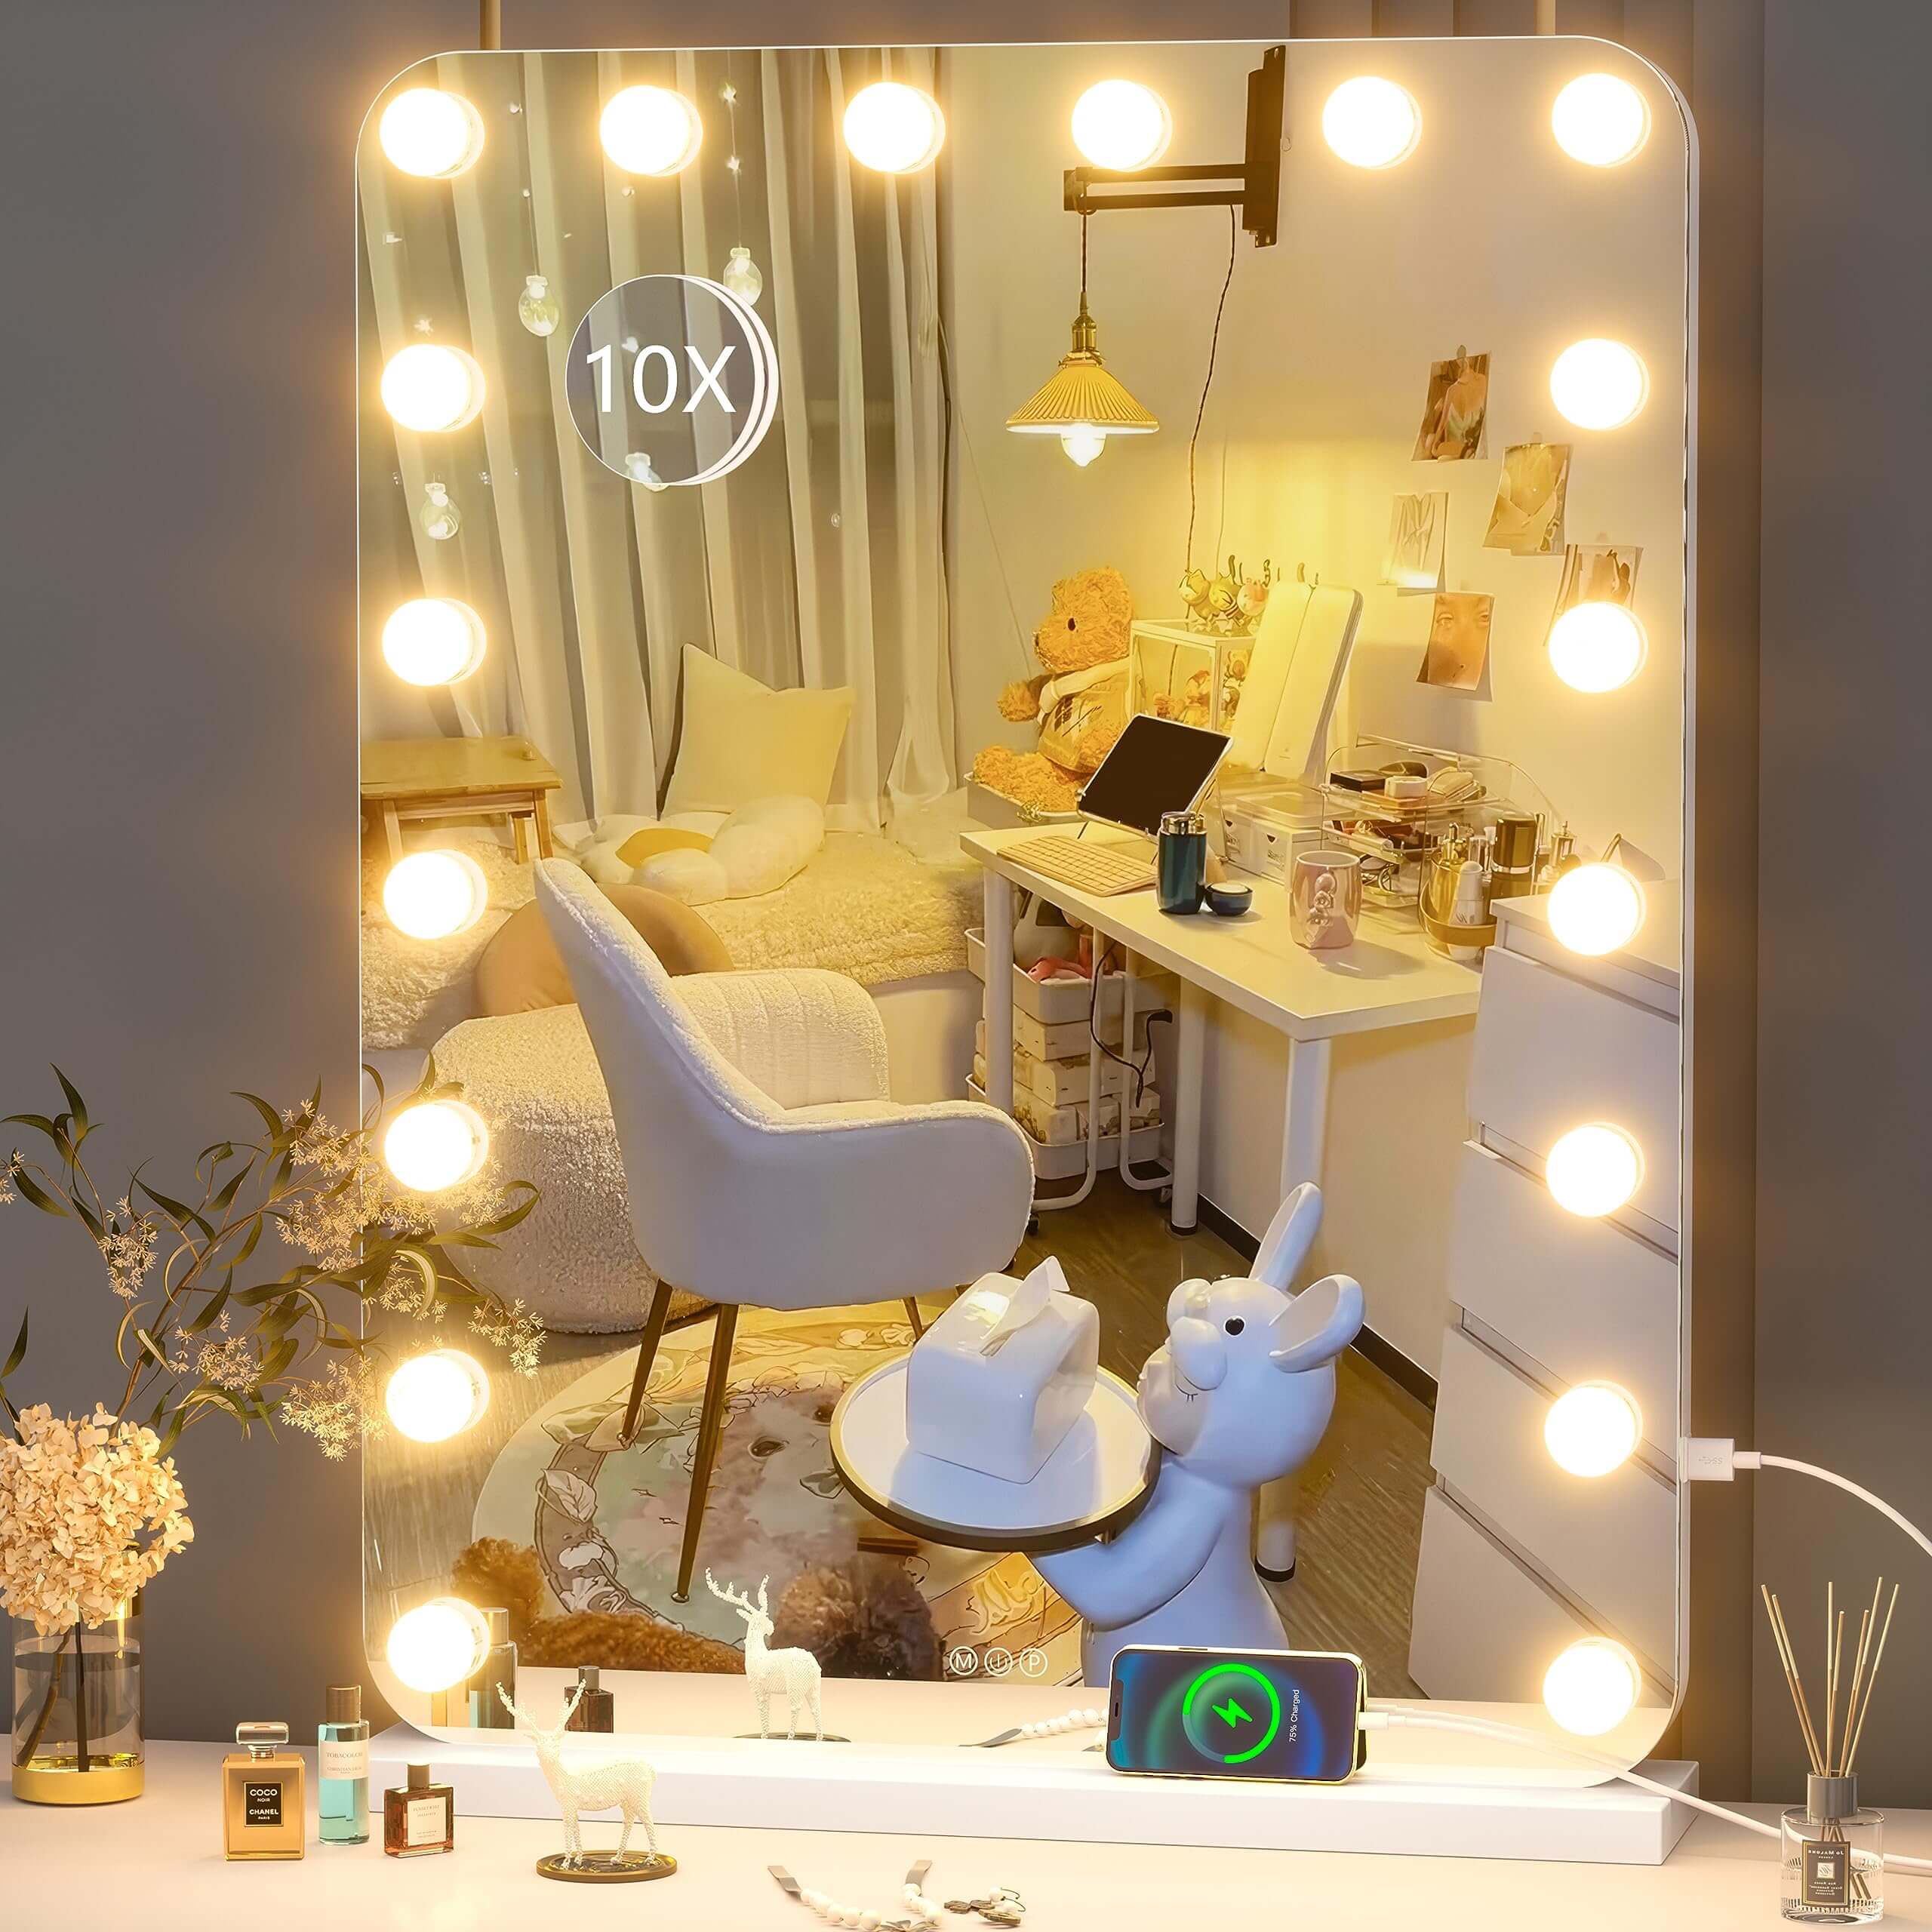 Hasipu led hollywood vanity mirror